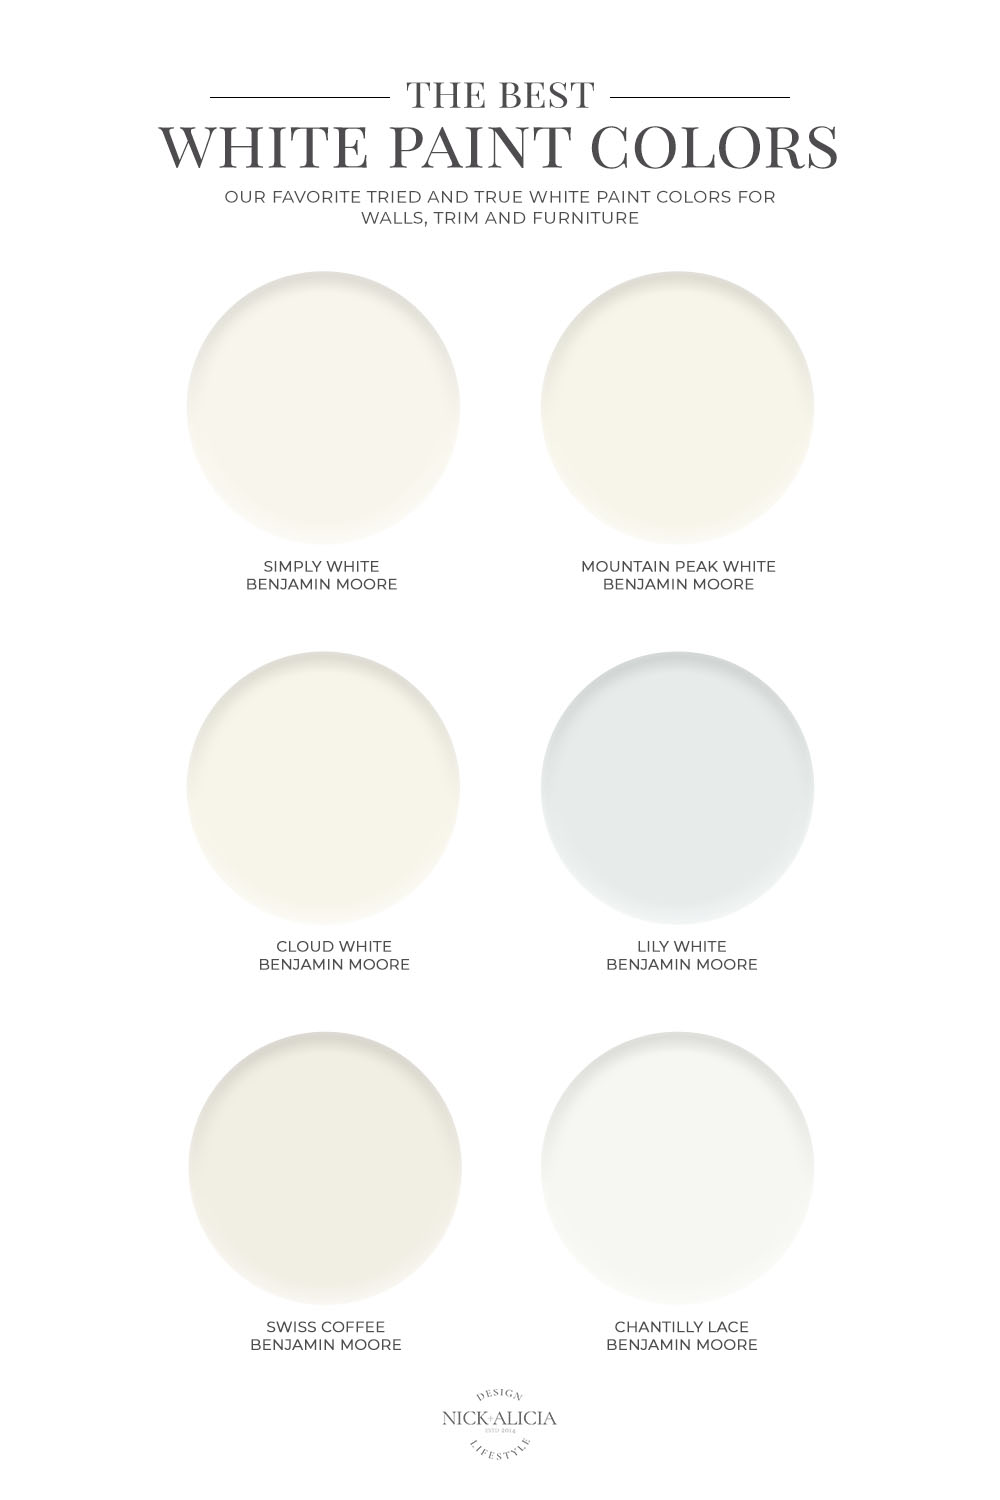 The Best White Paint Colors